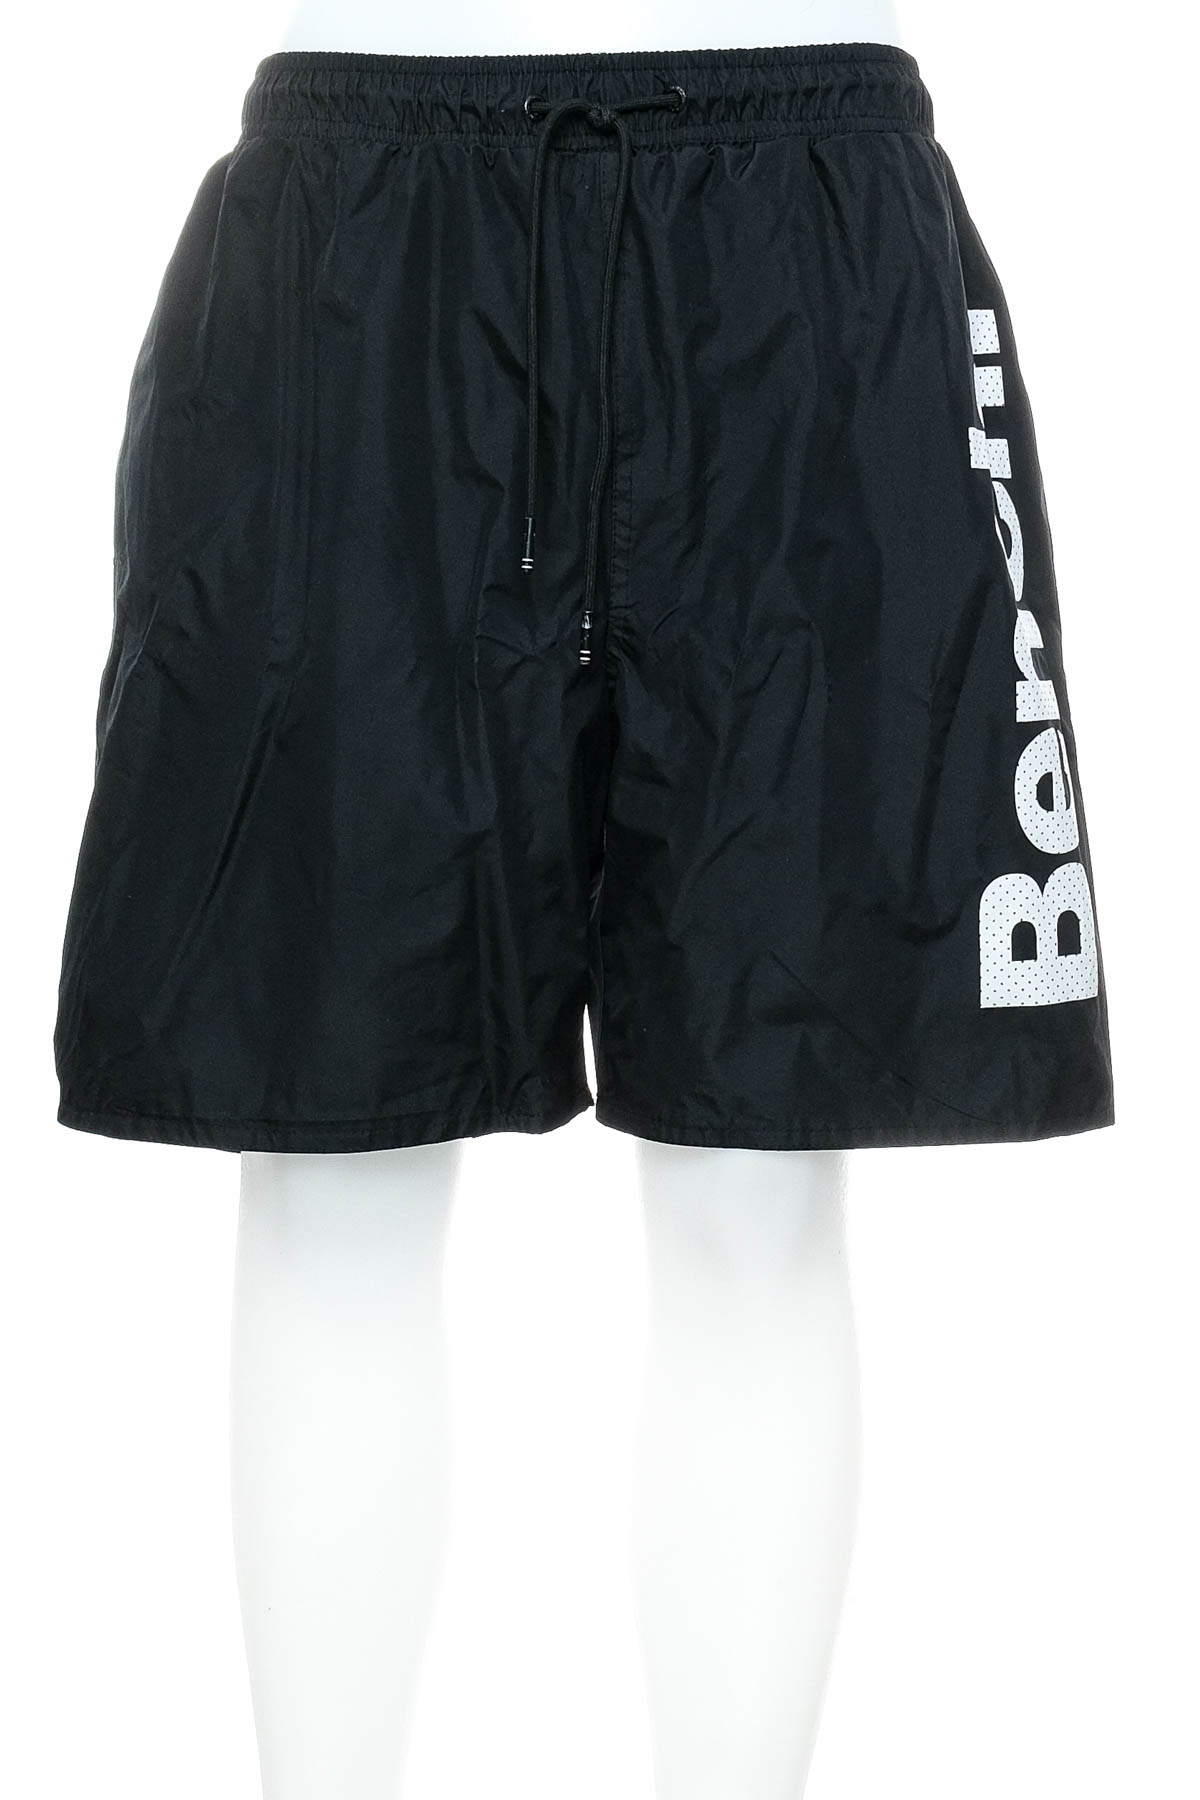 Men's shorts - Bench. - 0